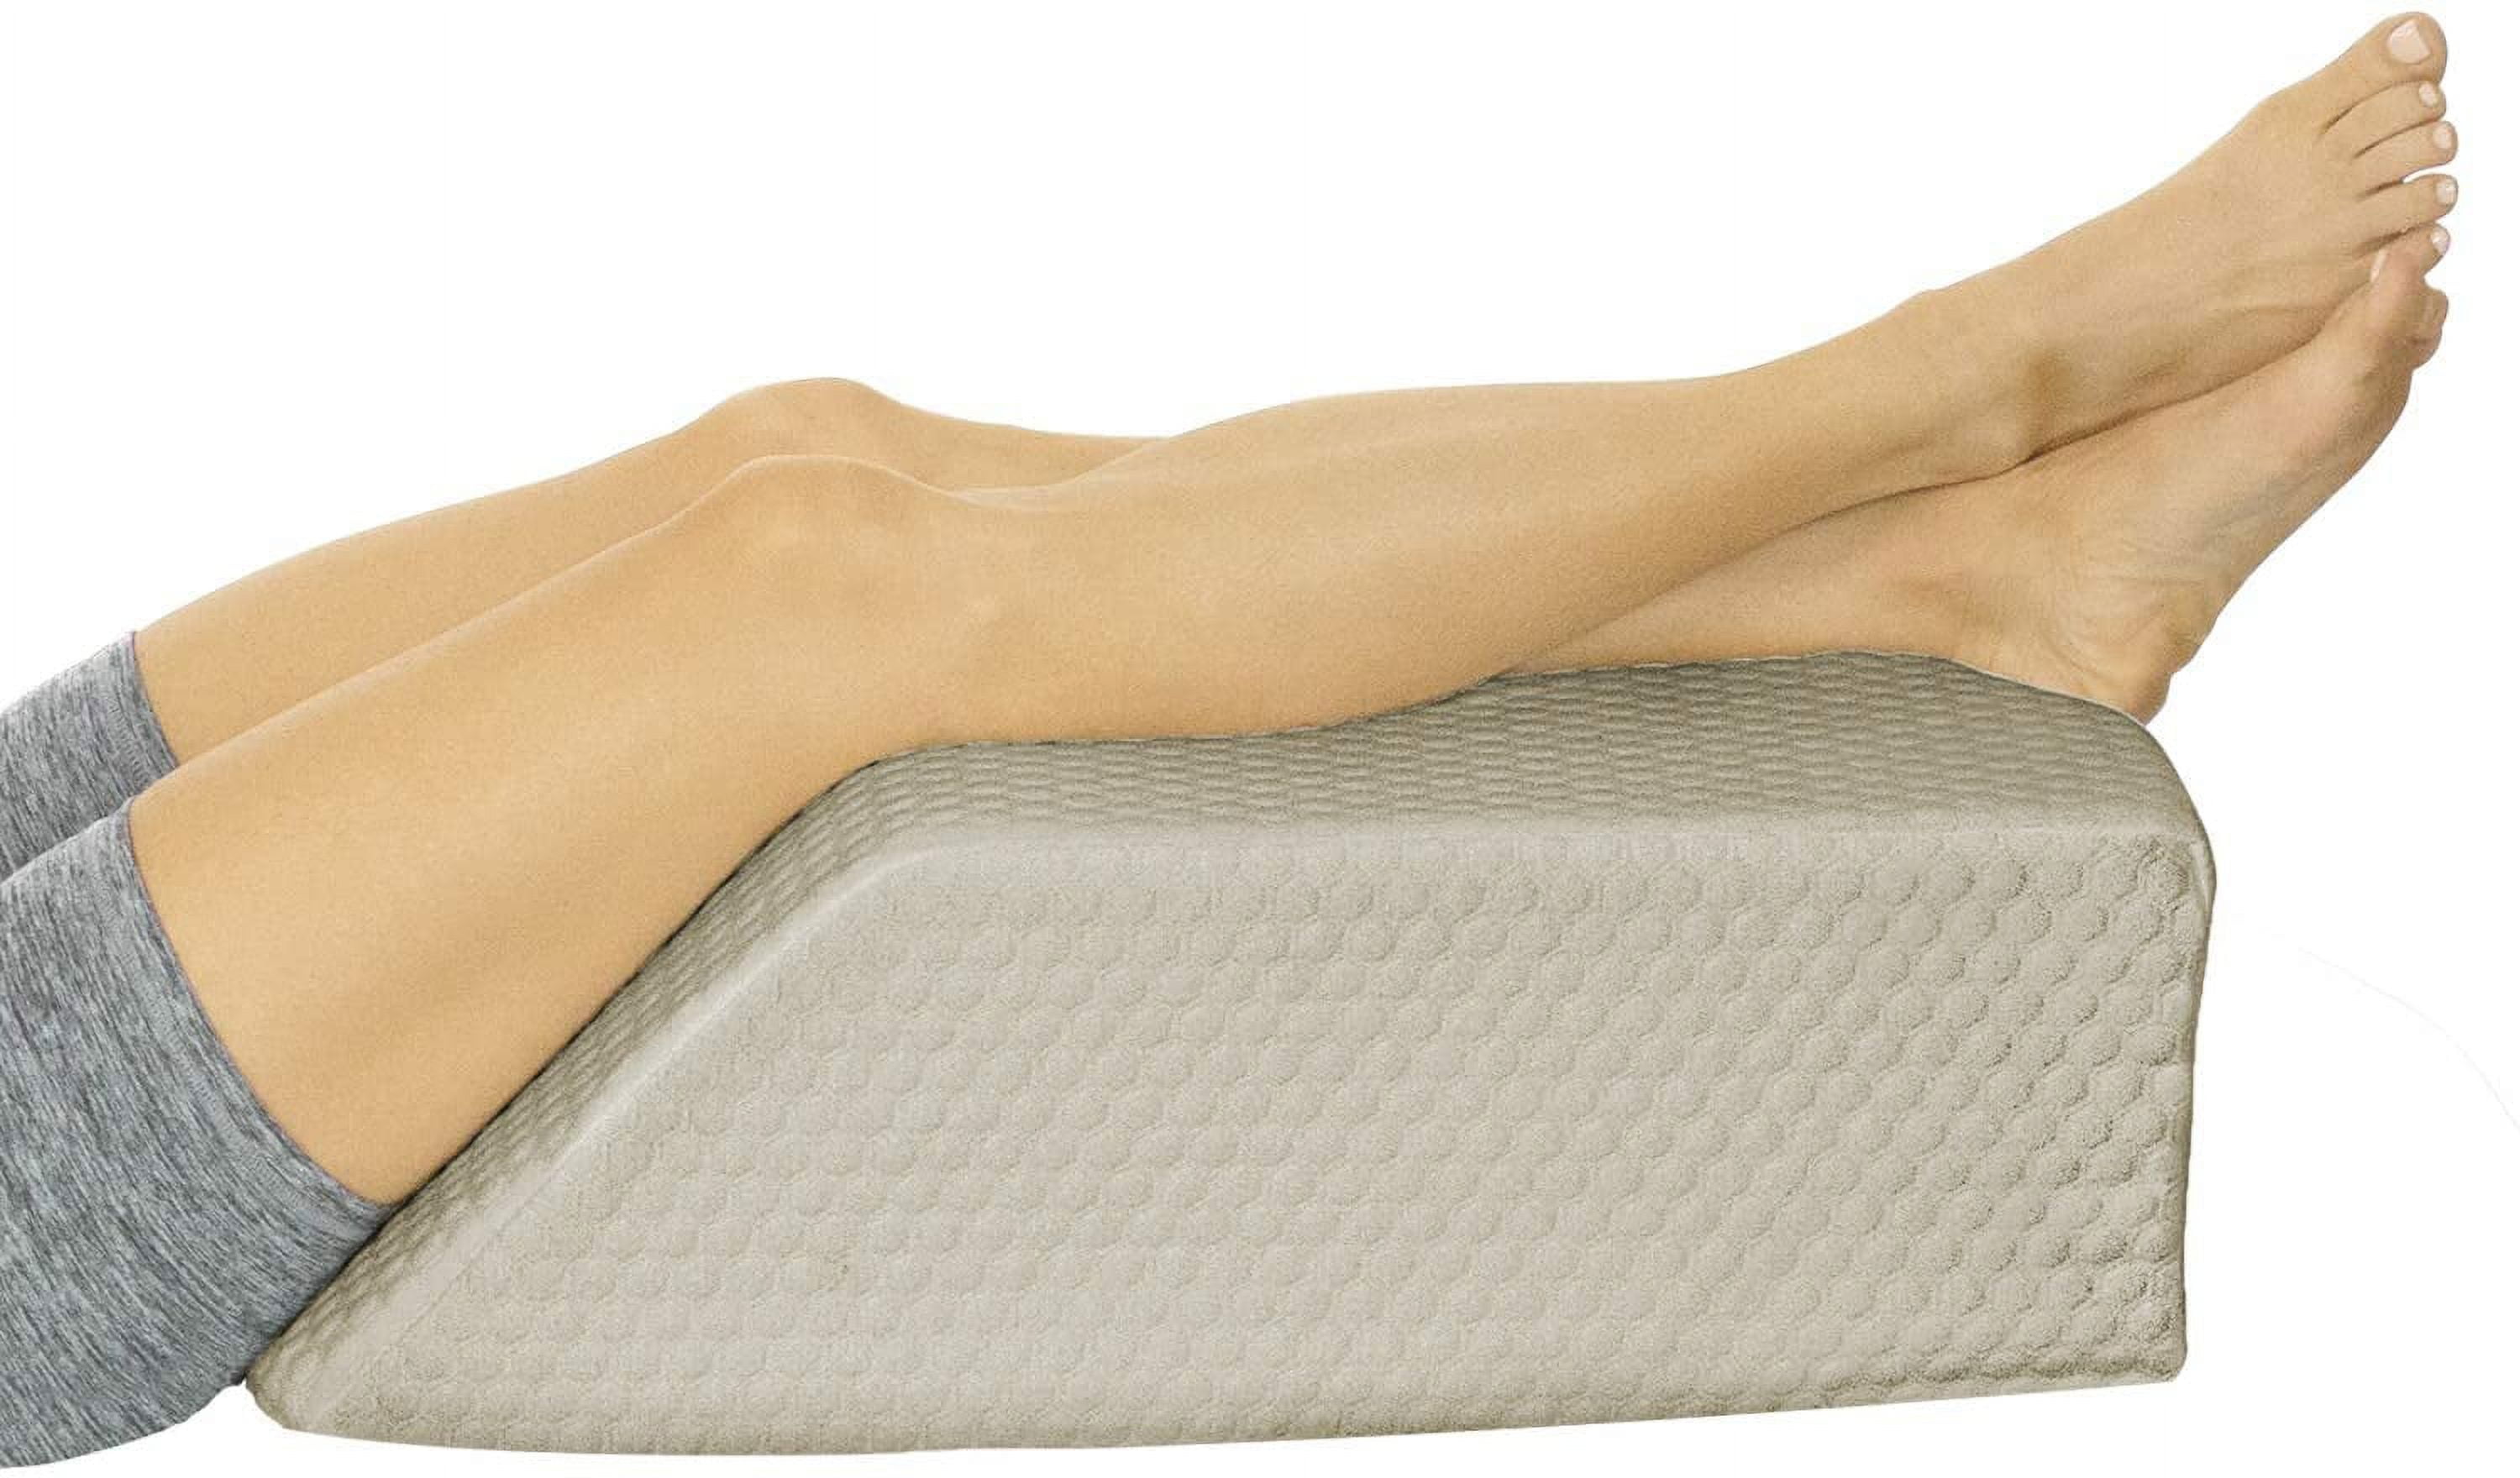  Knee Surgery Pillow Leg Elevation Pillow for After